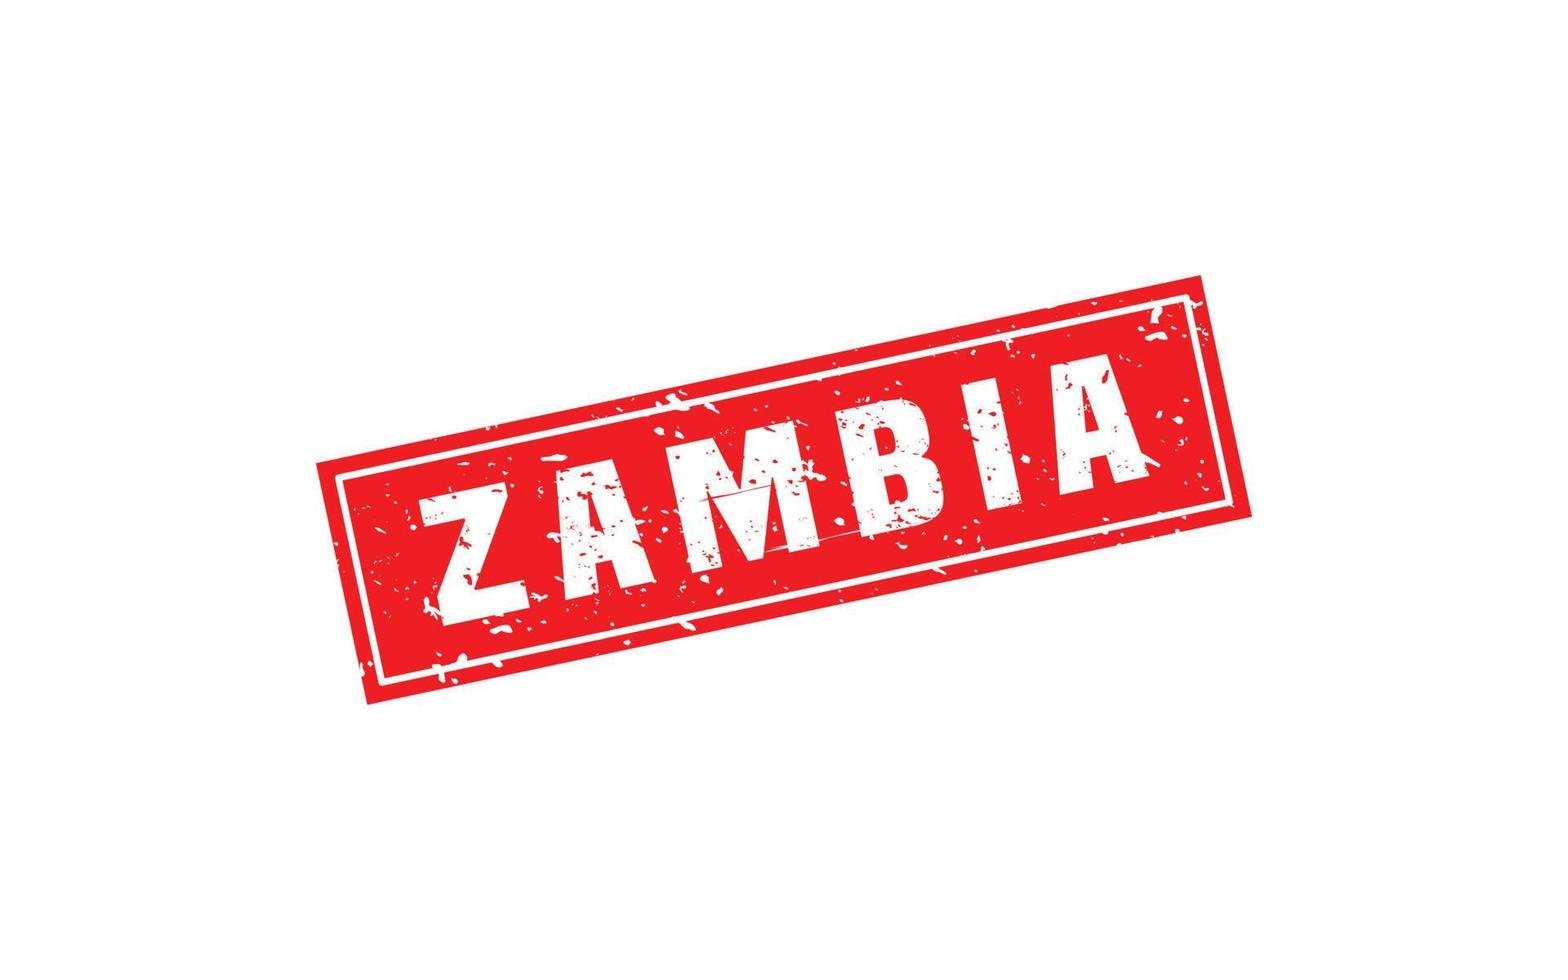 Zâmbia carimbo borracha com grunge estilo em branco fundo vetor